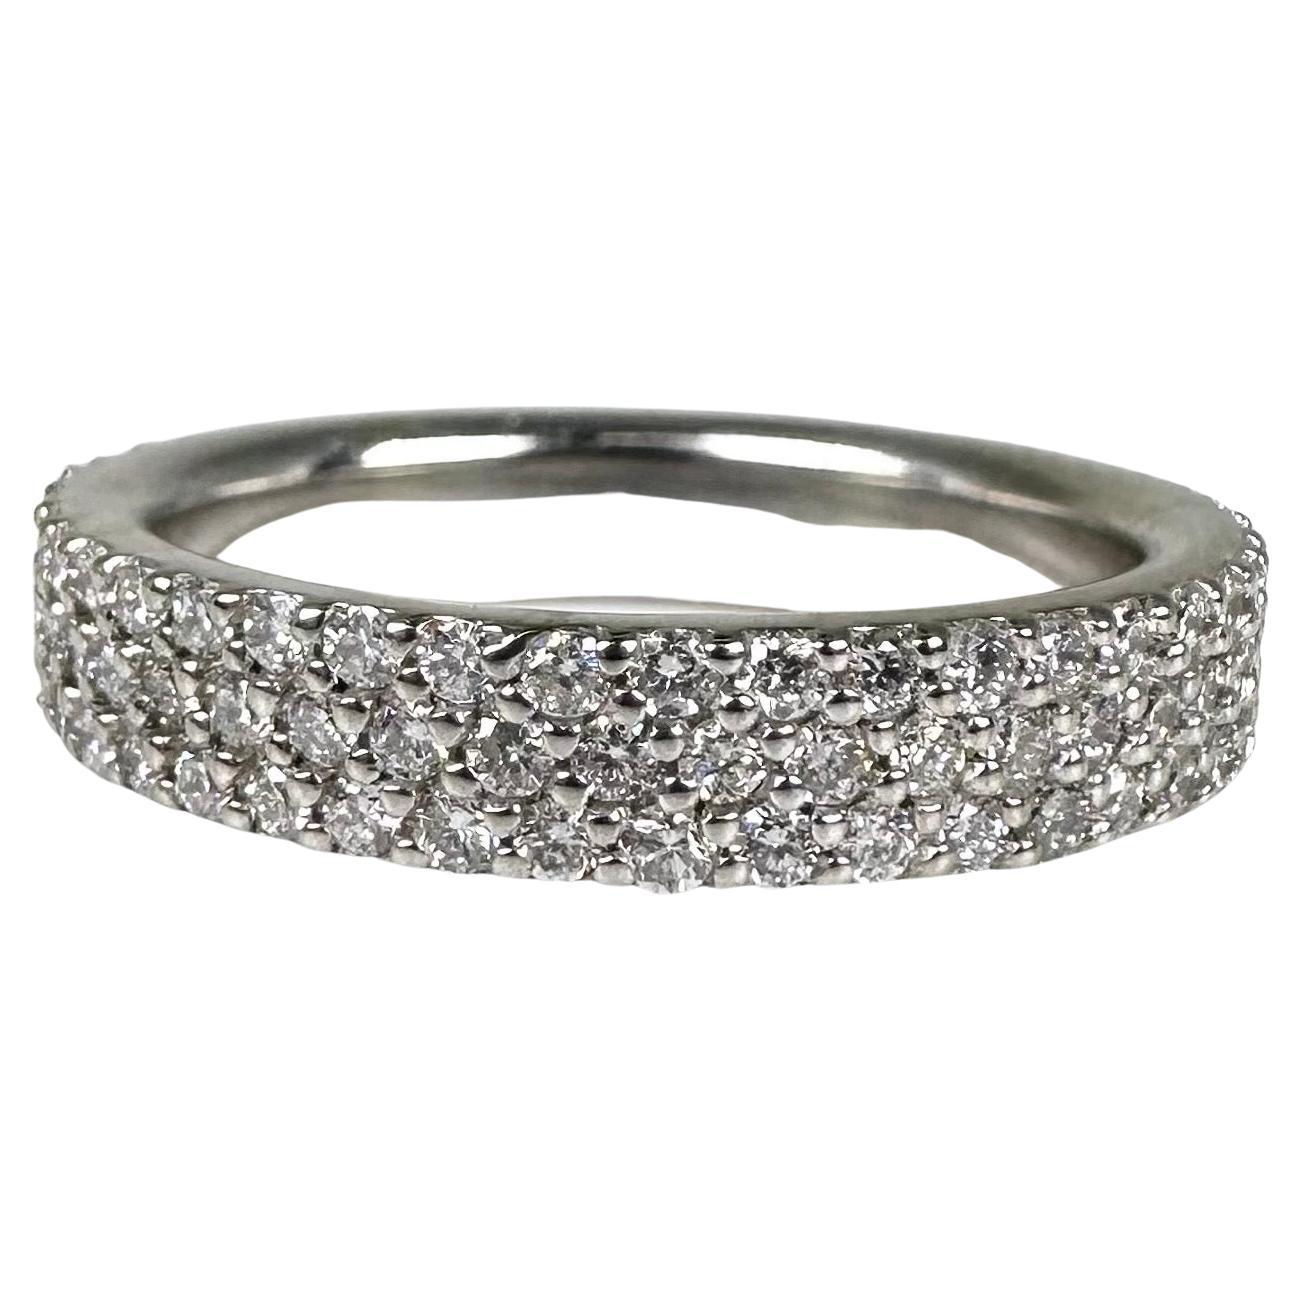 Pave set diamond wedding band 14KT gold 1.26ct diamond ring For Sale